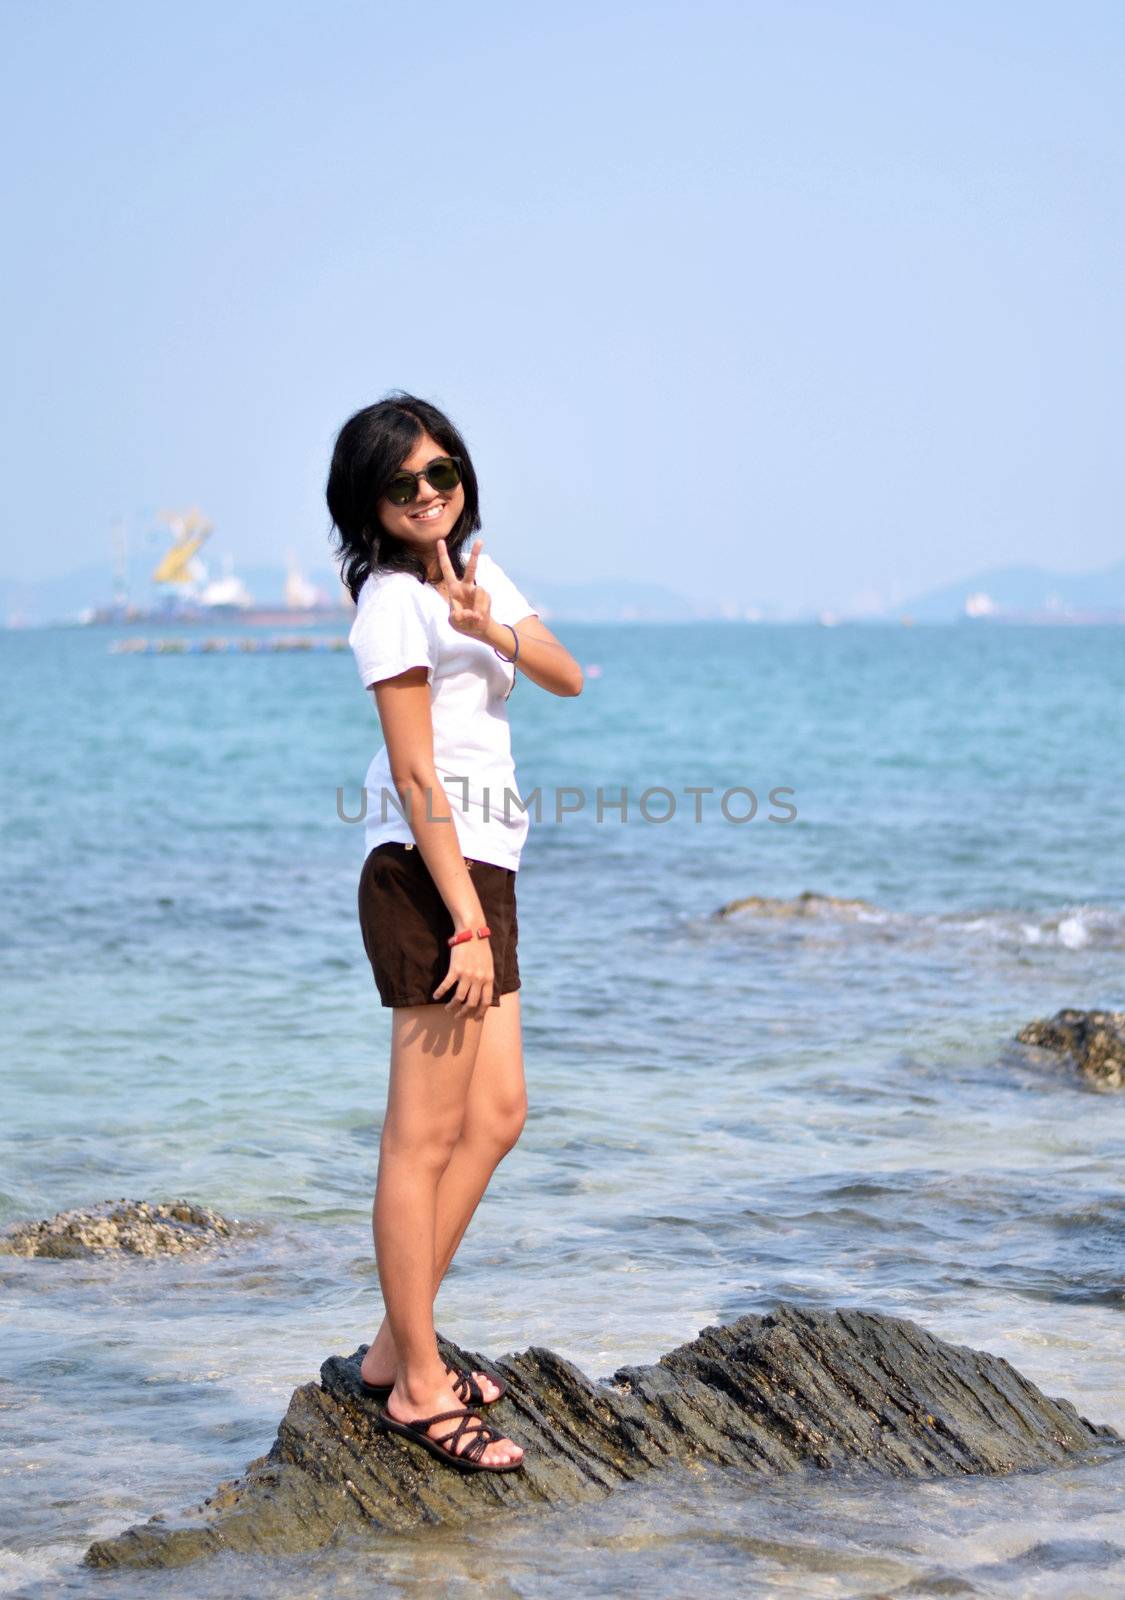 Asian woman on beach summer holiday by siraanamwong